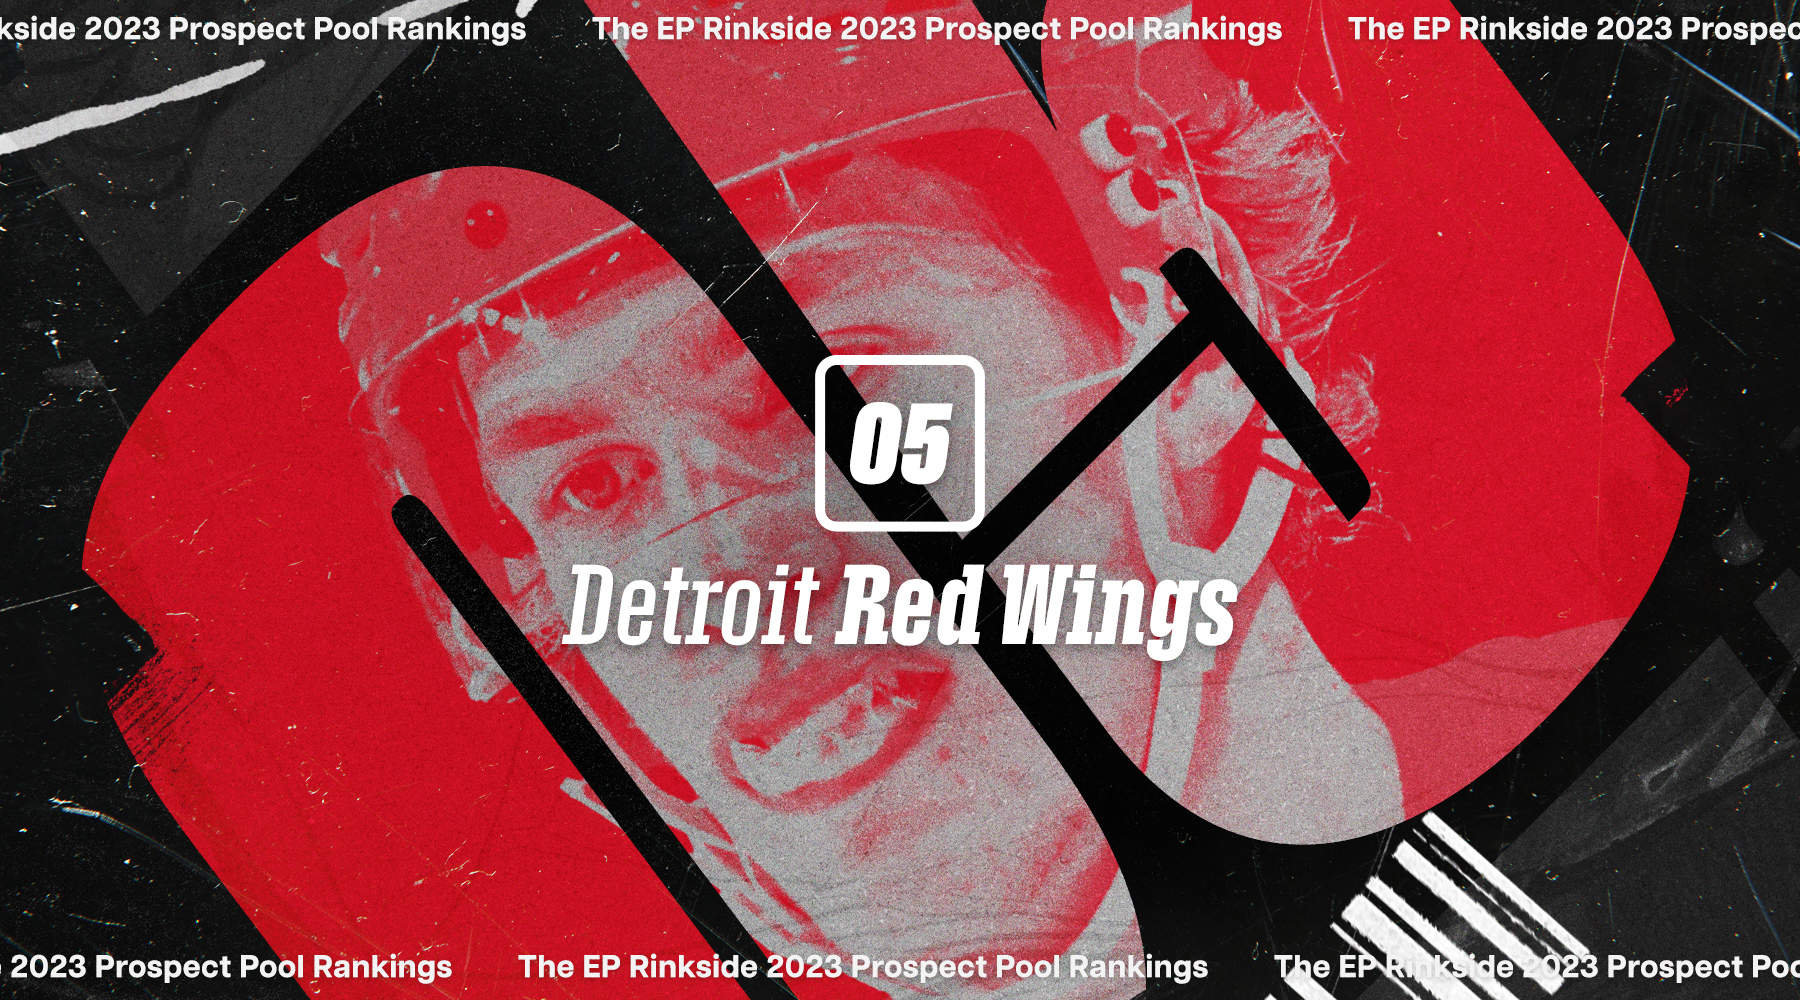 EP Rinkside 2023 NHL Prospect Pool Rankings: No. 5-ranked Detroit Red Wings